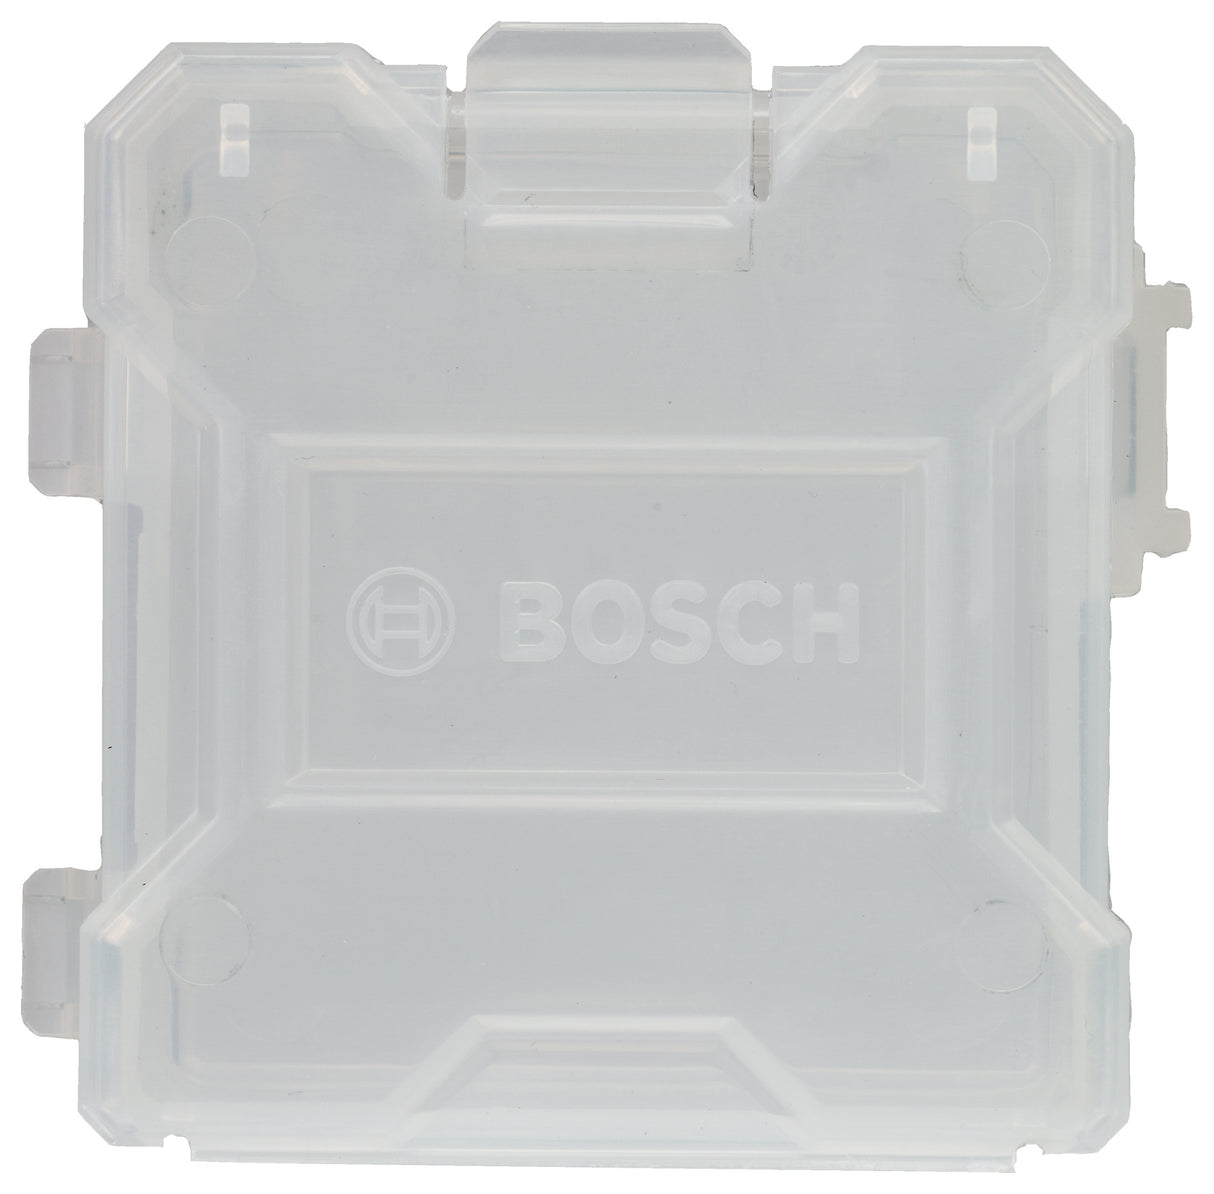 Bosch Professional Empty Box - 1pc (Boxed)